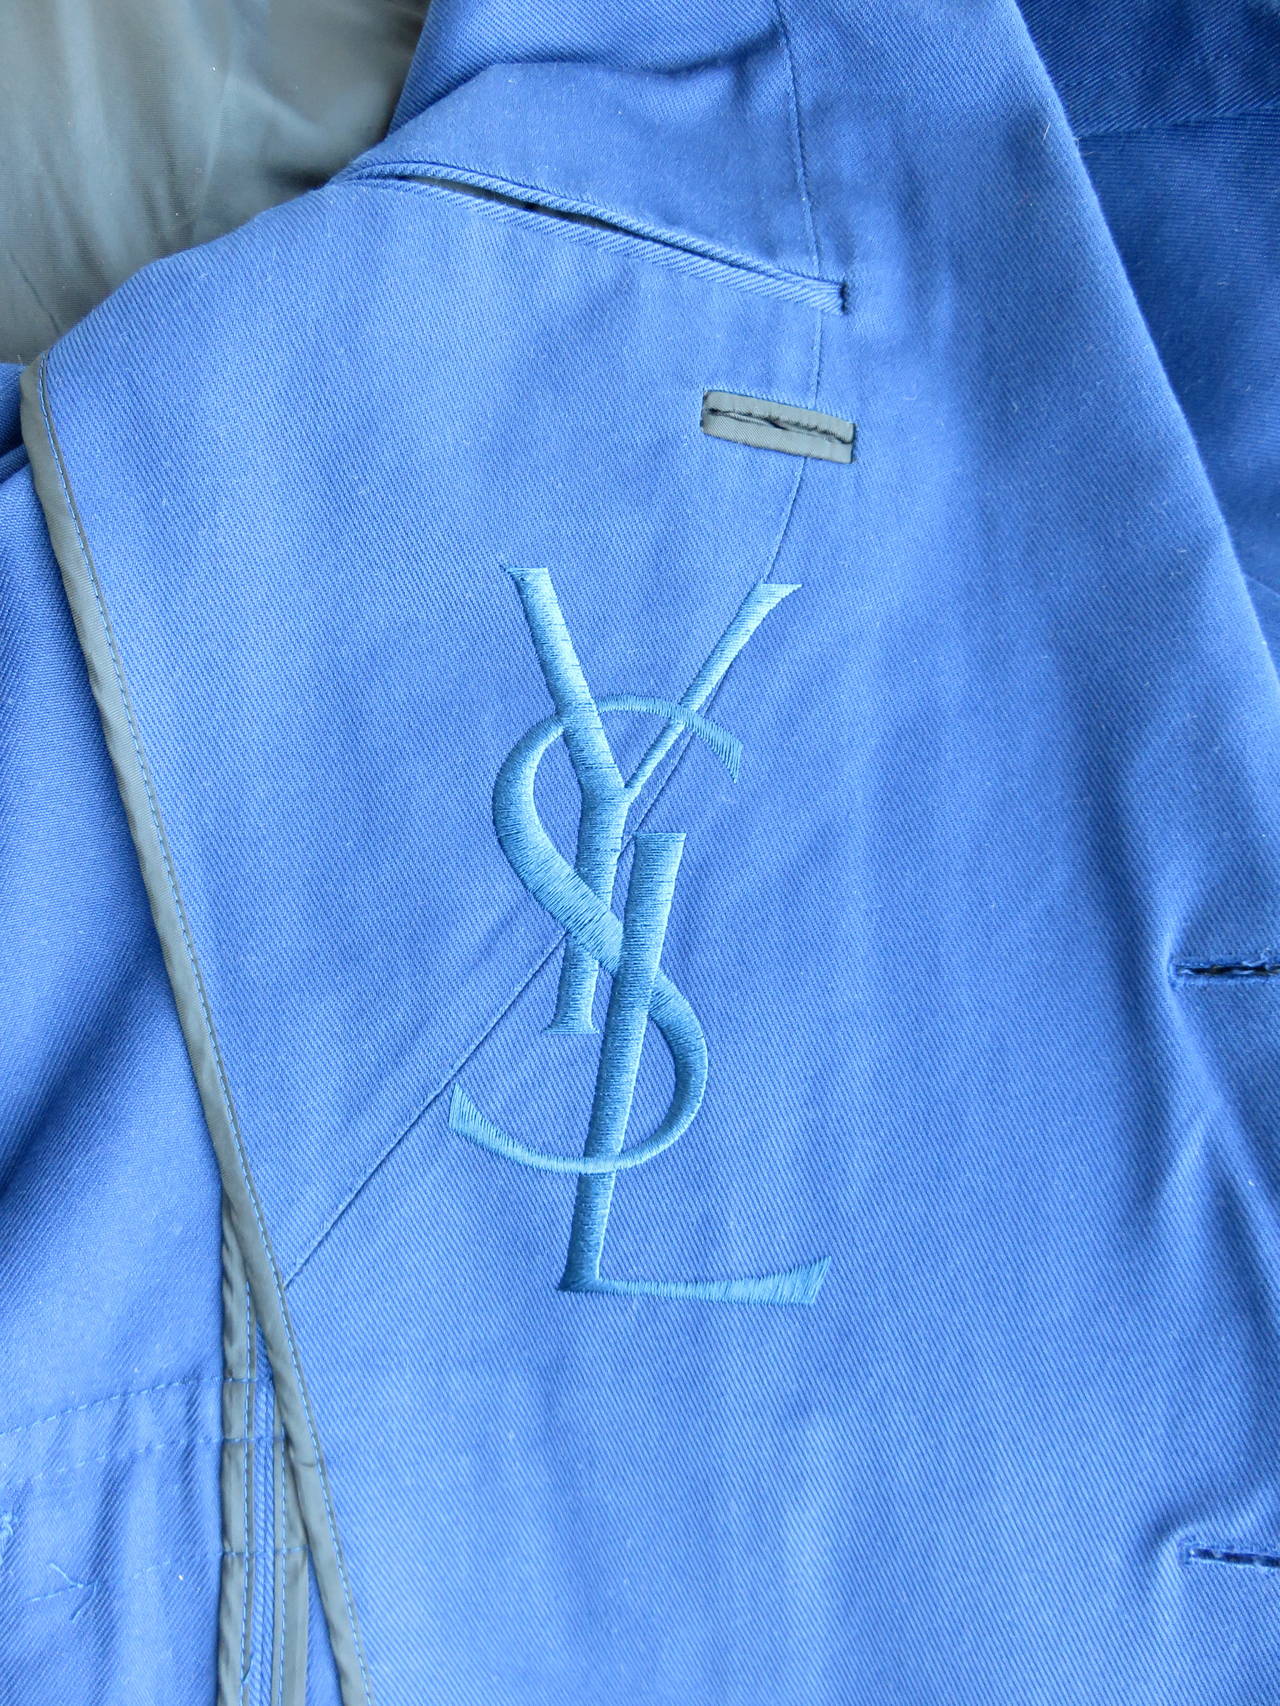 YVES SAINT LAURENT by Tom Ford Men's French blue twill blazer jacket 4